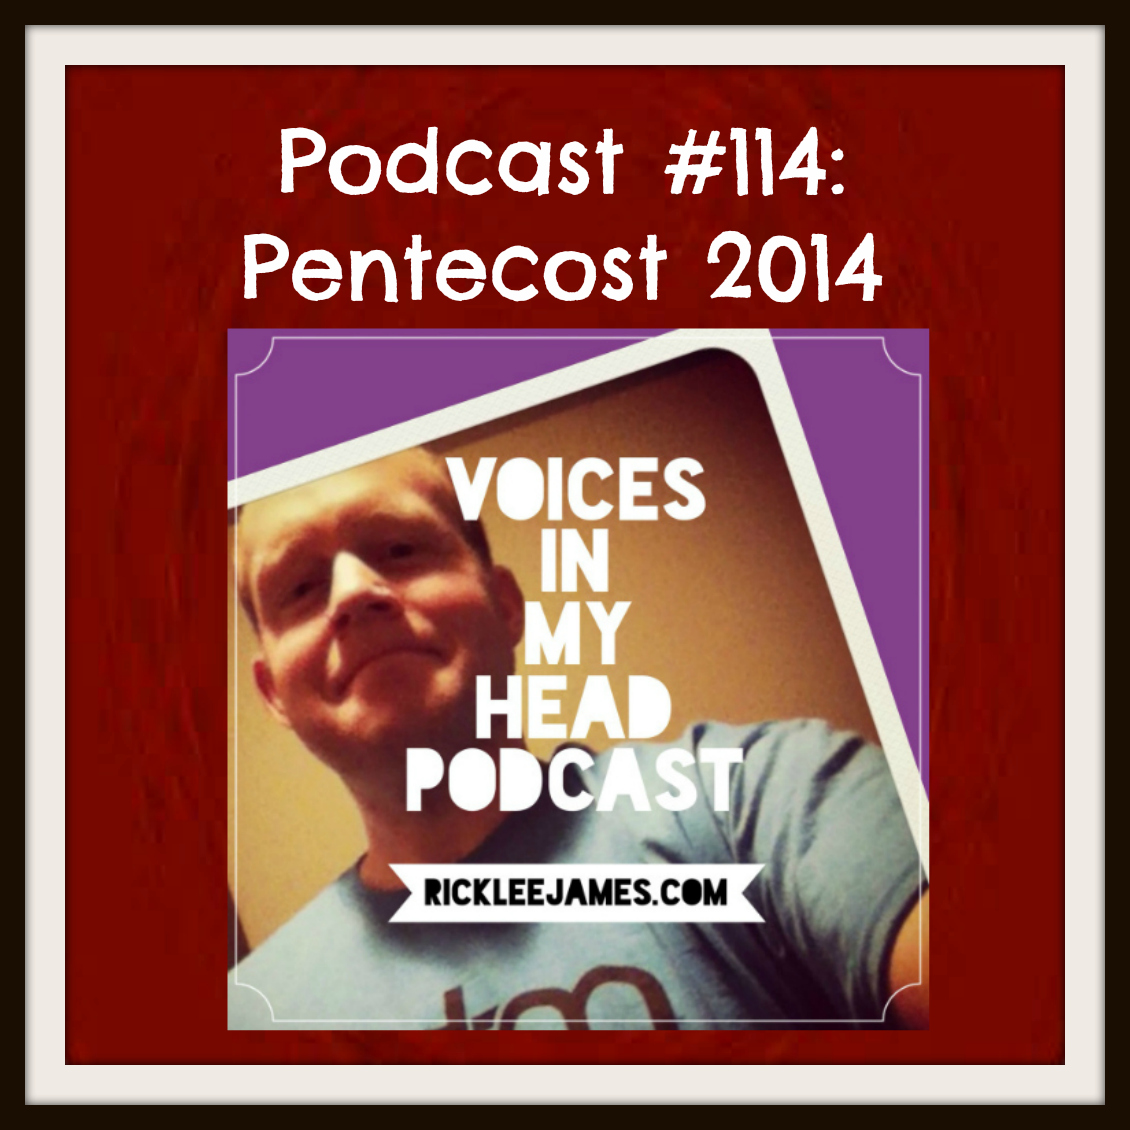 Podcast #114: Pentecost 2014